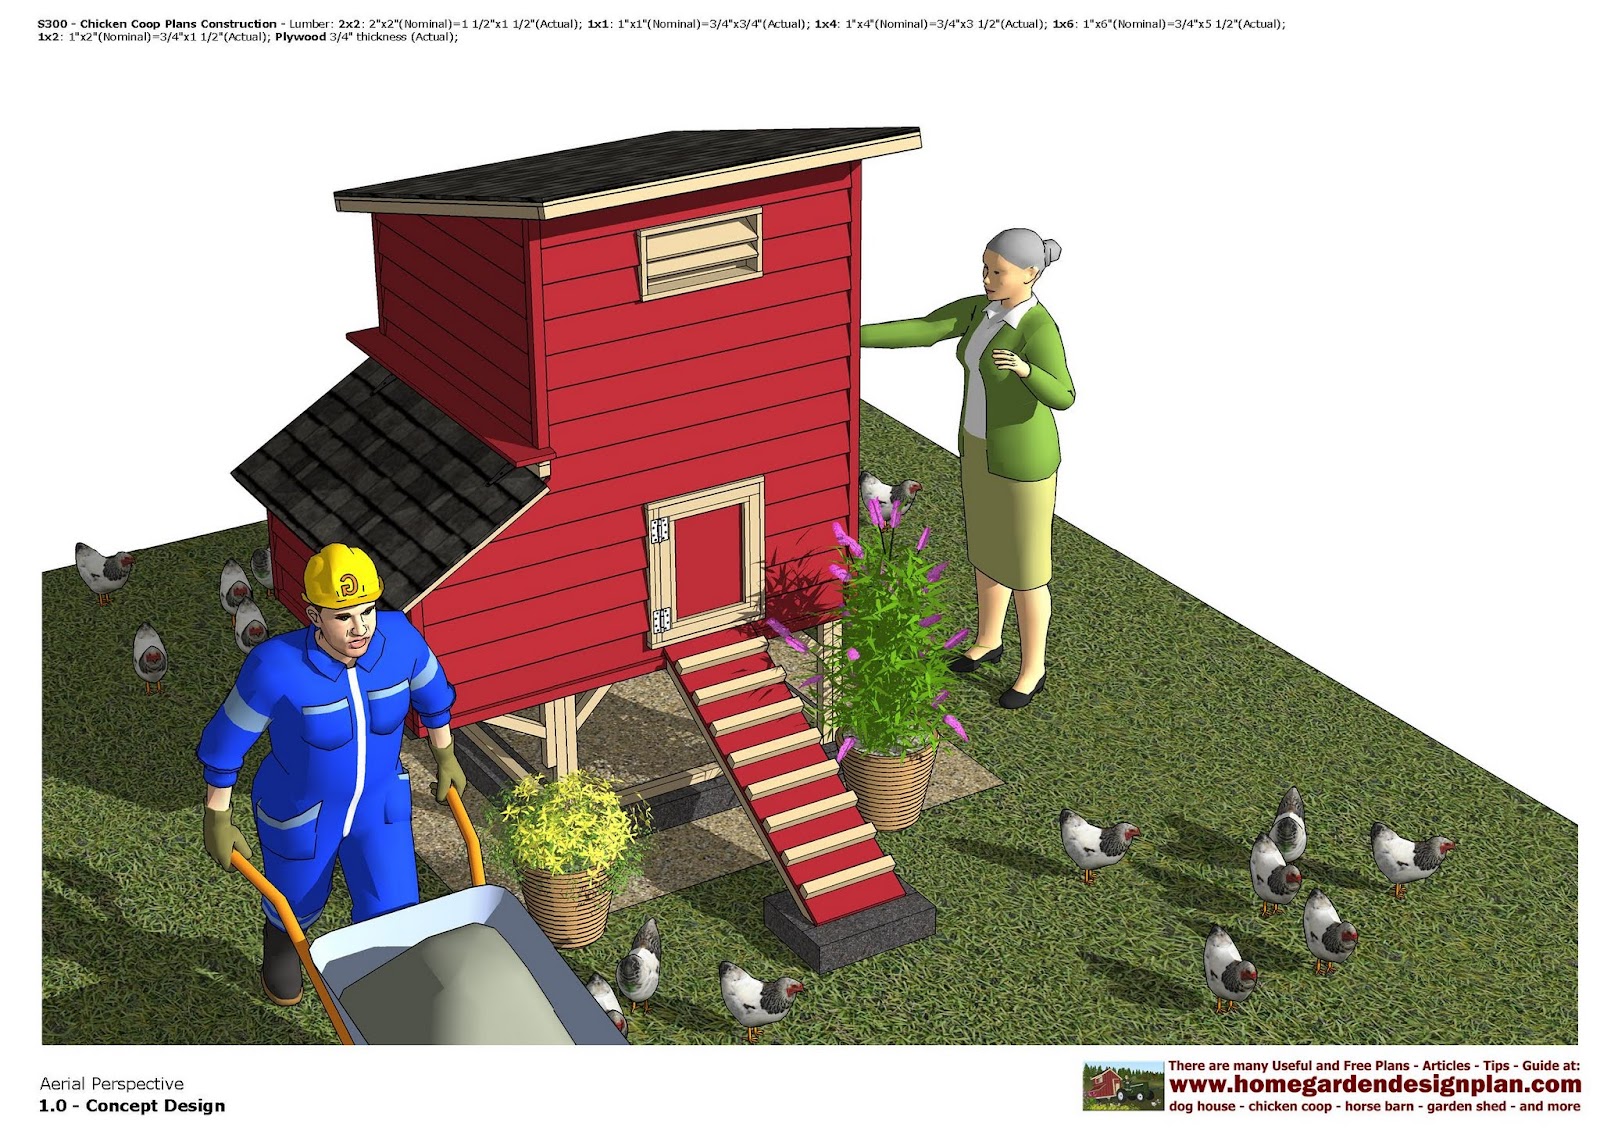 home garden plans: S300 _ Chicken Coop Plans Construction ...